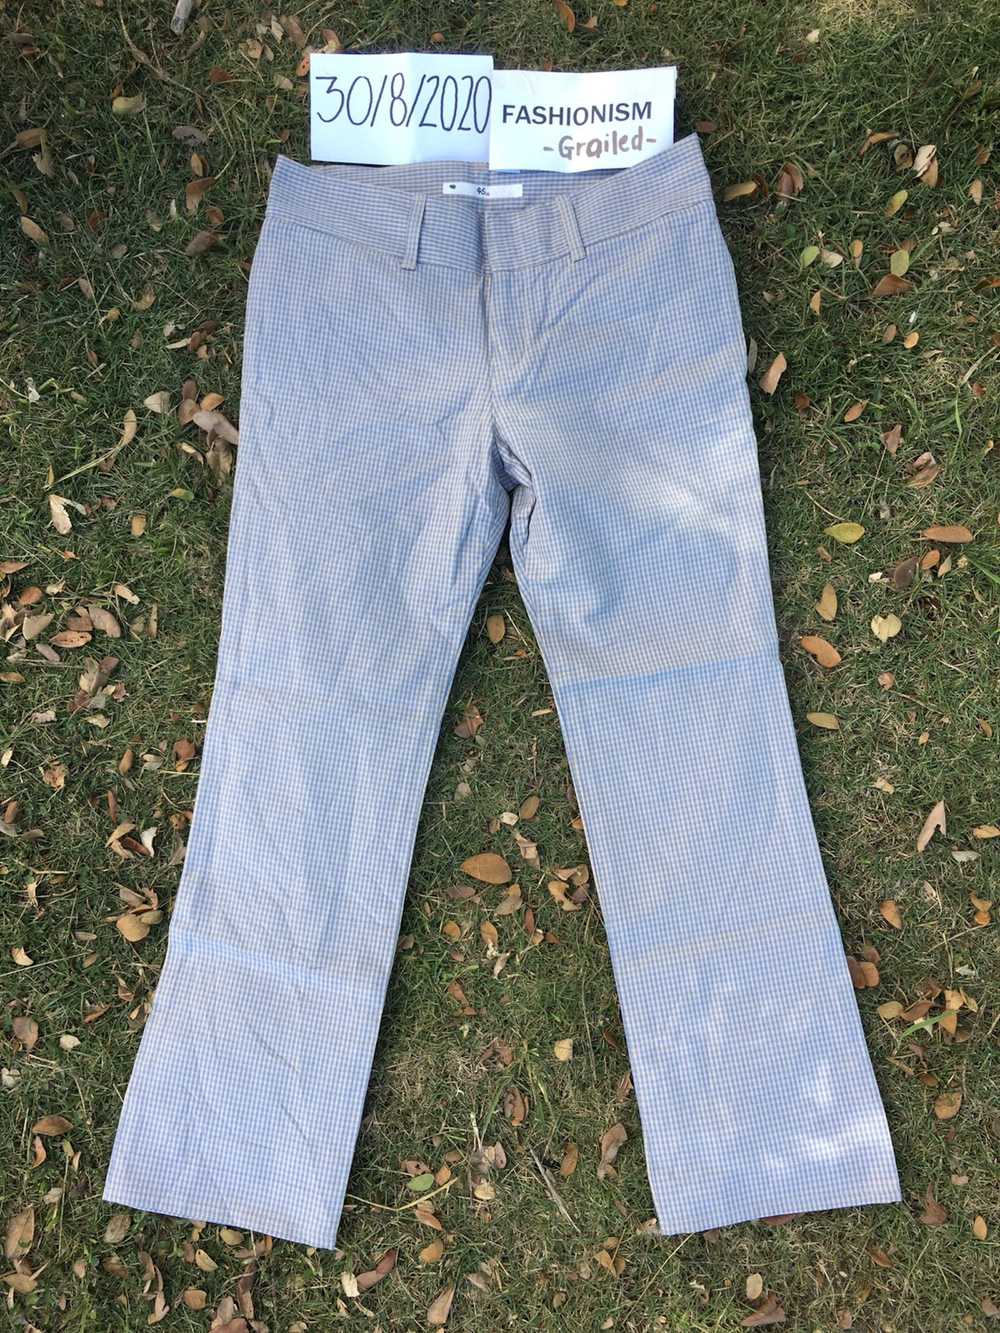 45rpm × Japanese Brand 45 RPM tartan pants - image 2